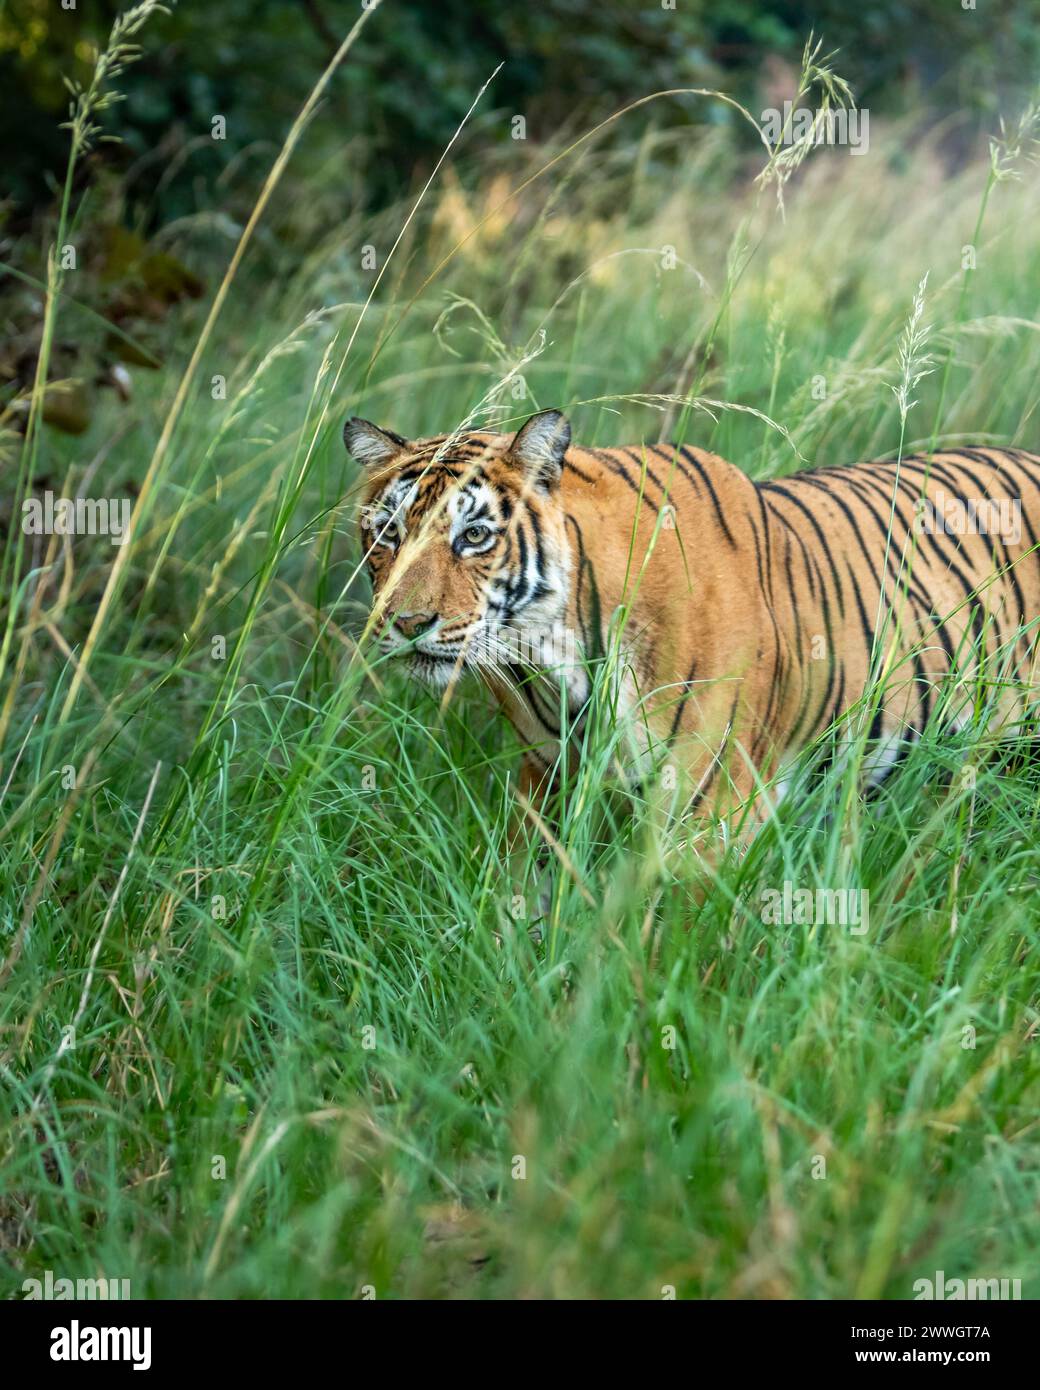 Femelle sauvage indienne tigresse tigresse tigre du bengale panthera tigris camouflage dans l'herbe verte naturelle en hiver safari au parc national de ranthambore inde Banque D'Images